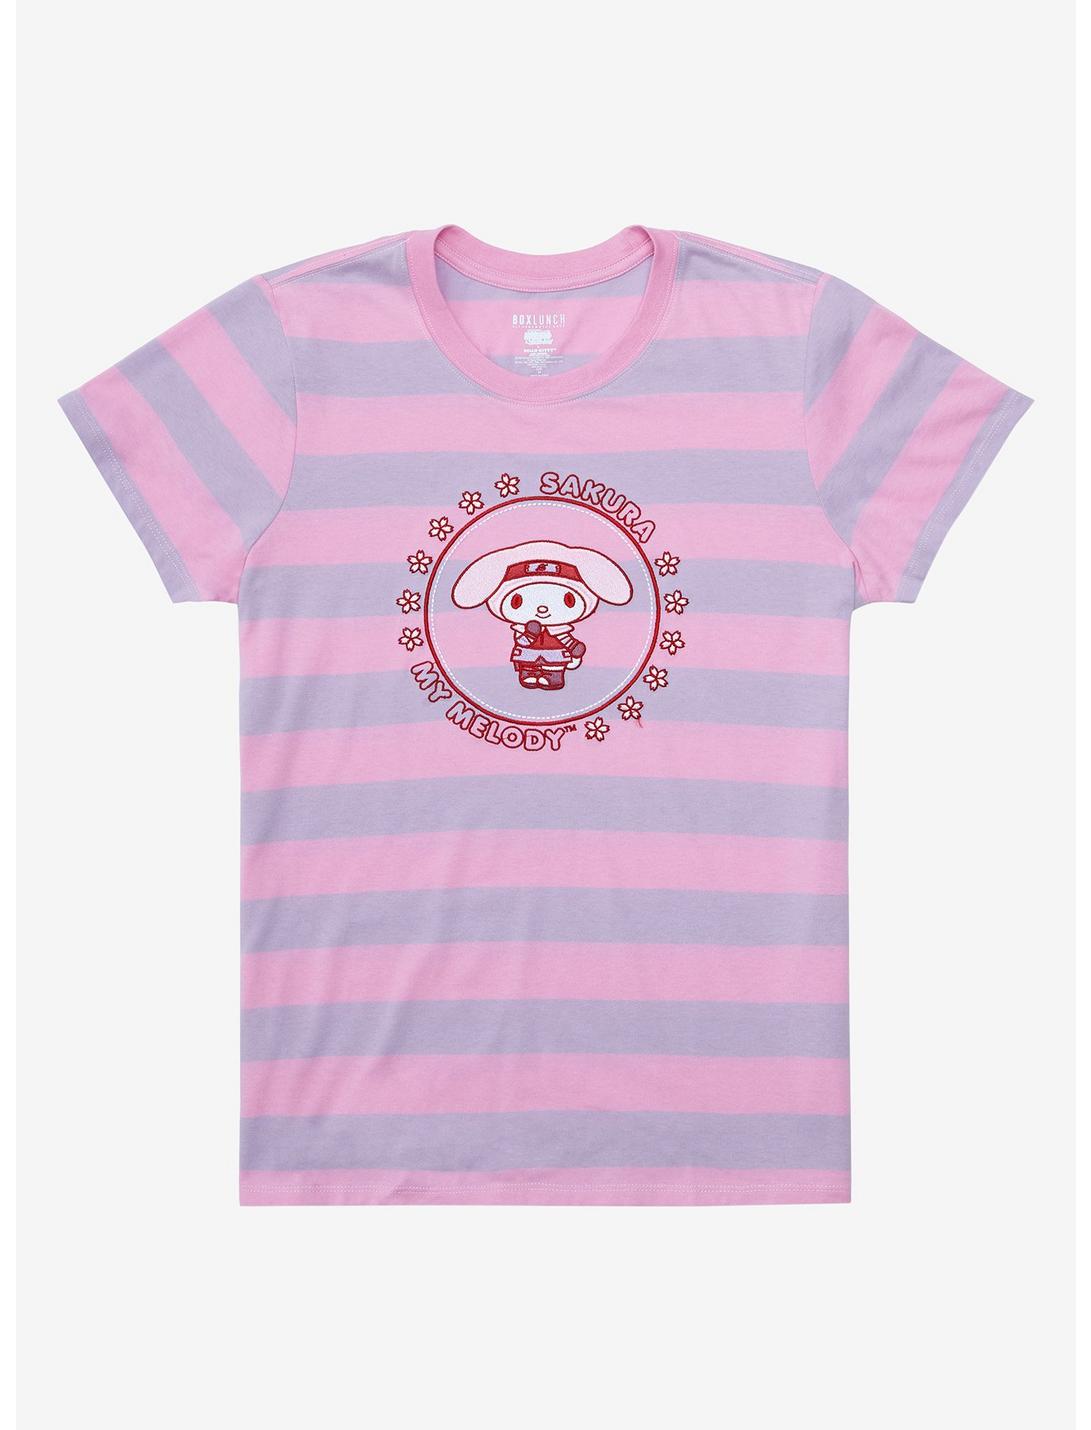 NWT Gymboree Bird Tee Shirt Top Girls Pink 3,5/6,7/8,10/12,14